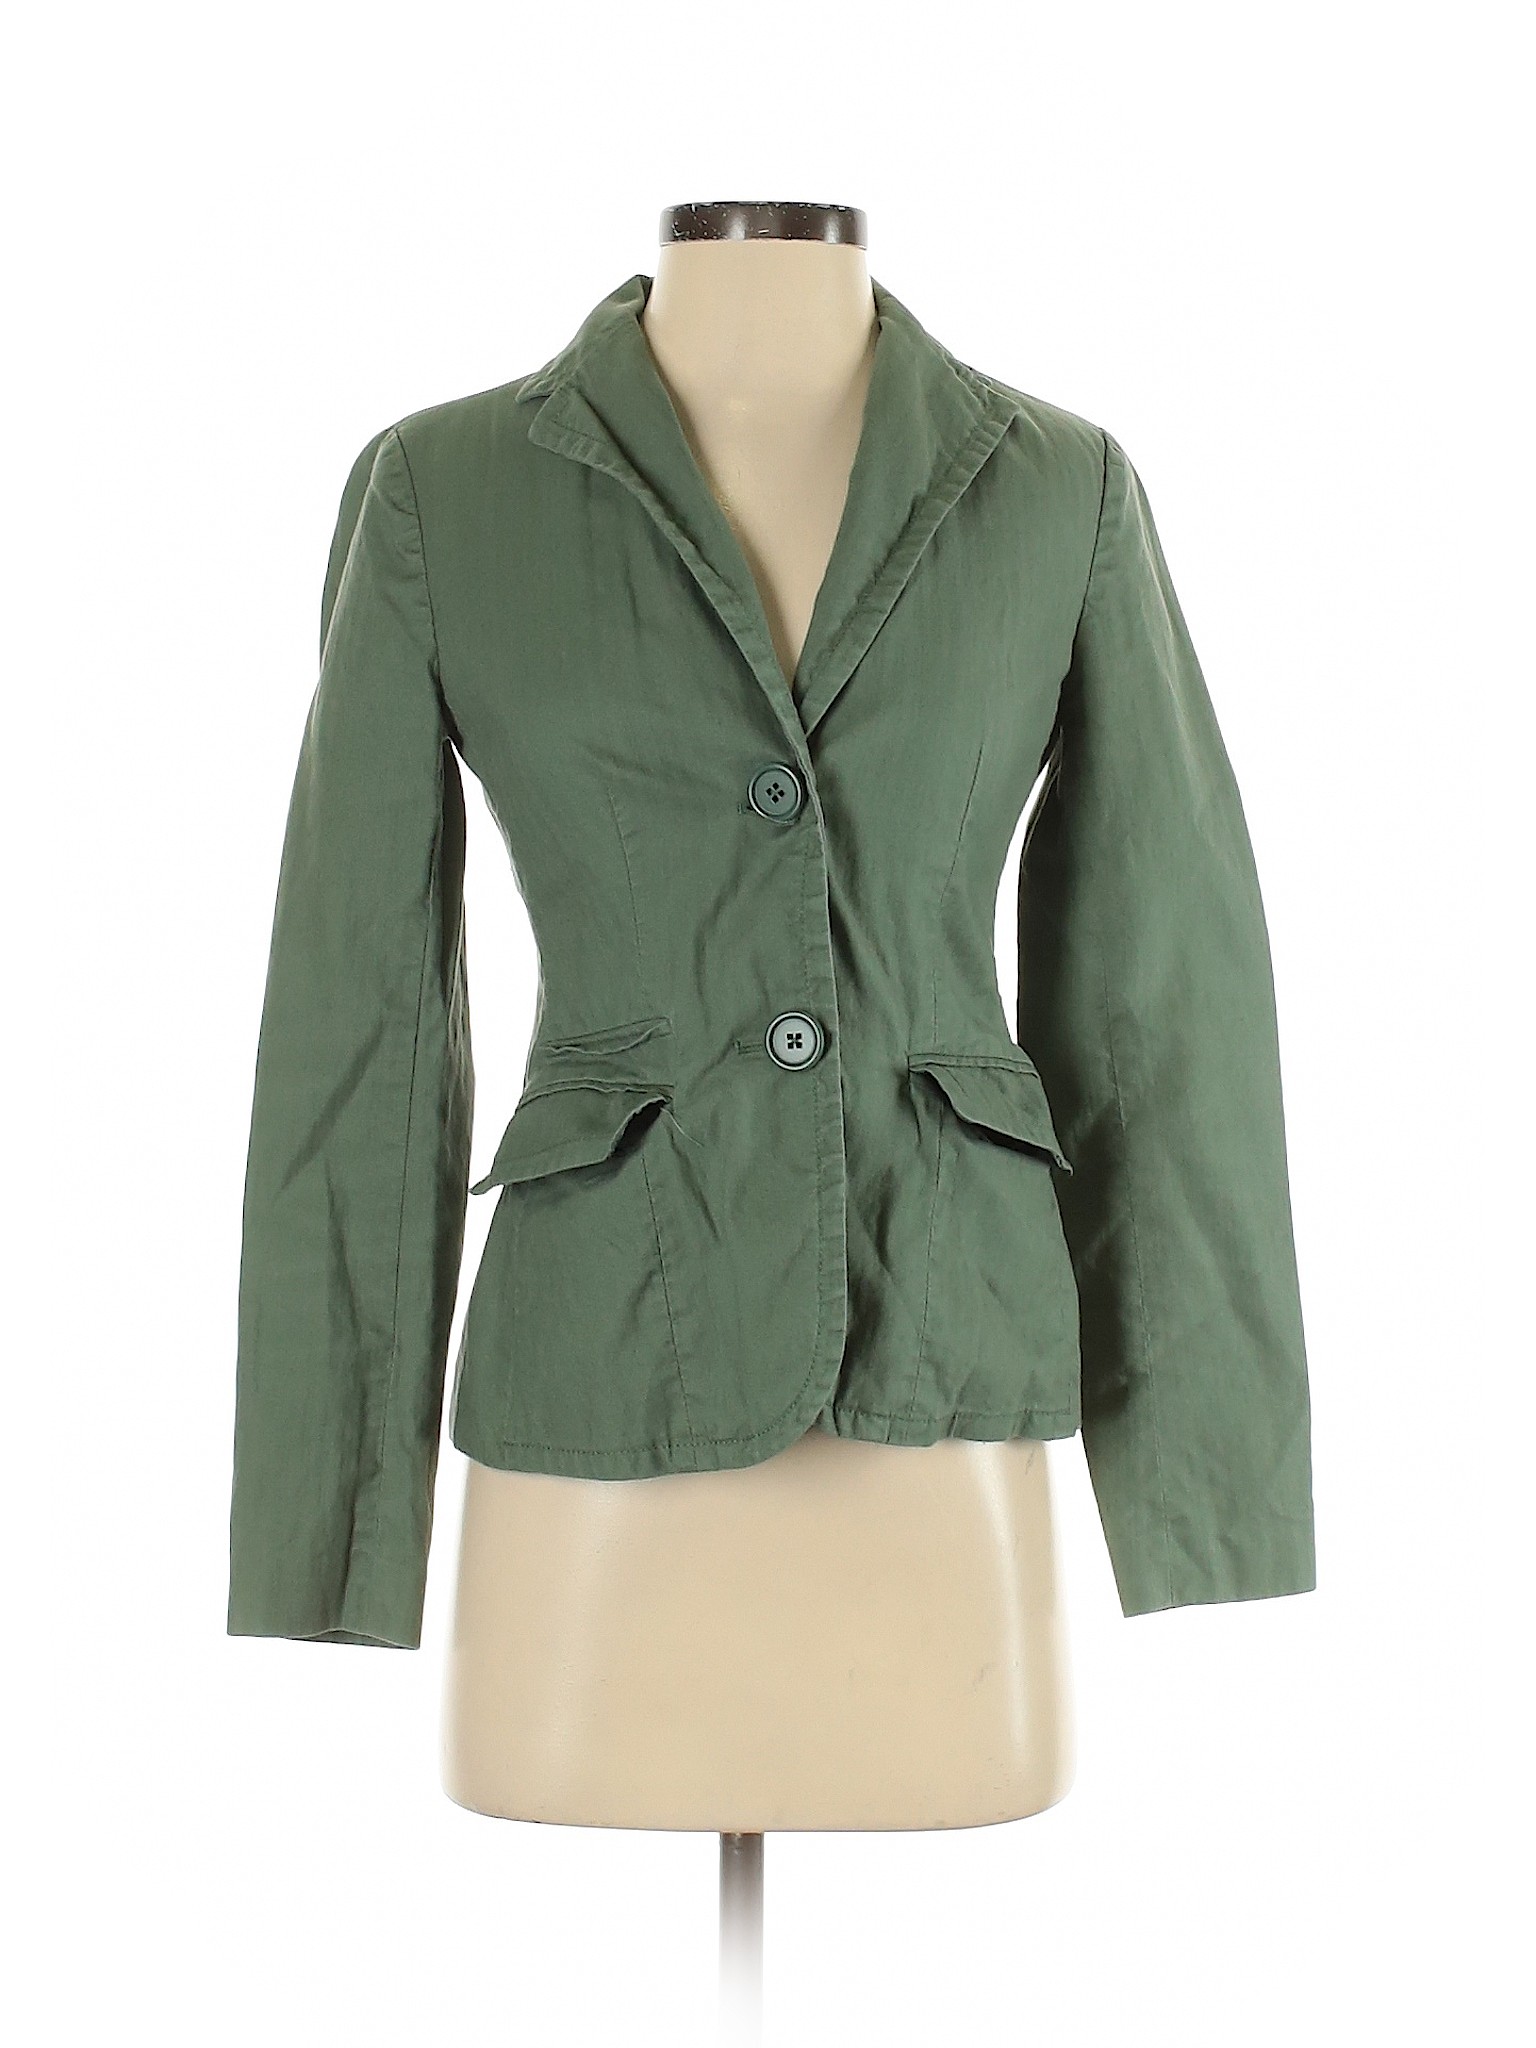 Gap Women Green Blazer 0 | eBay